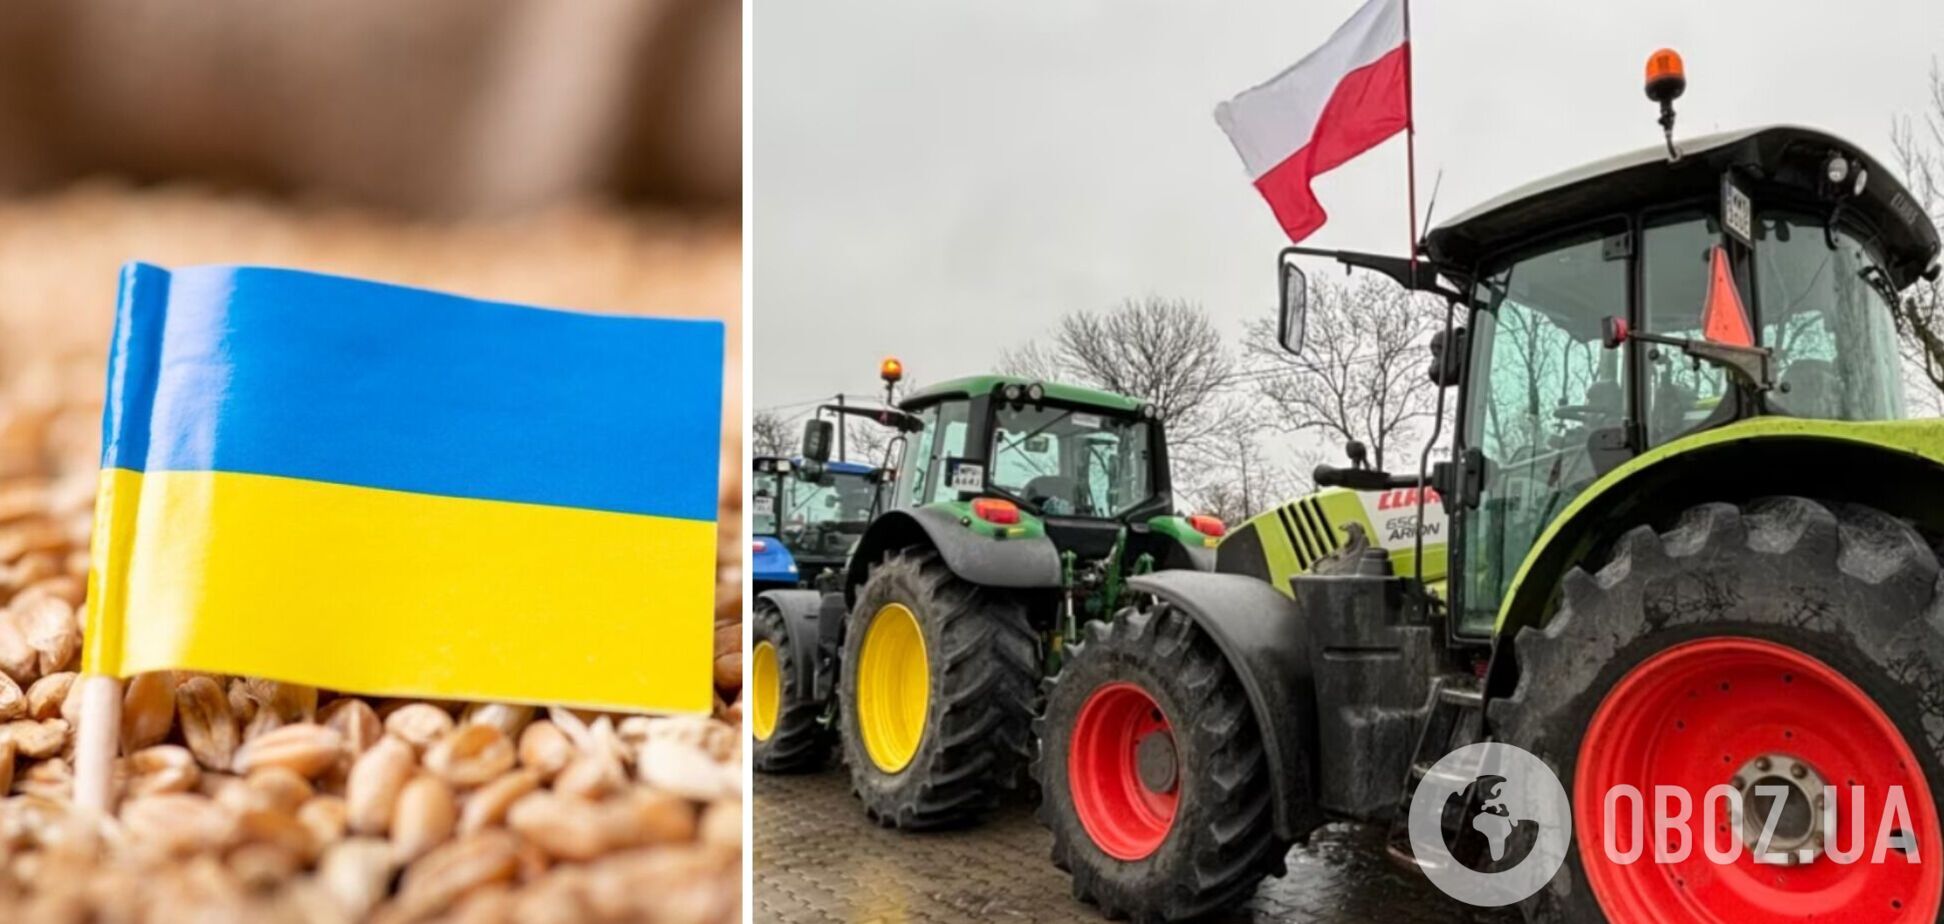 Поляки посилили блокаду кордону України